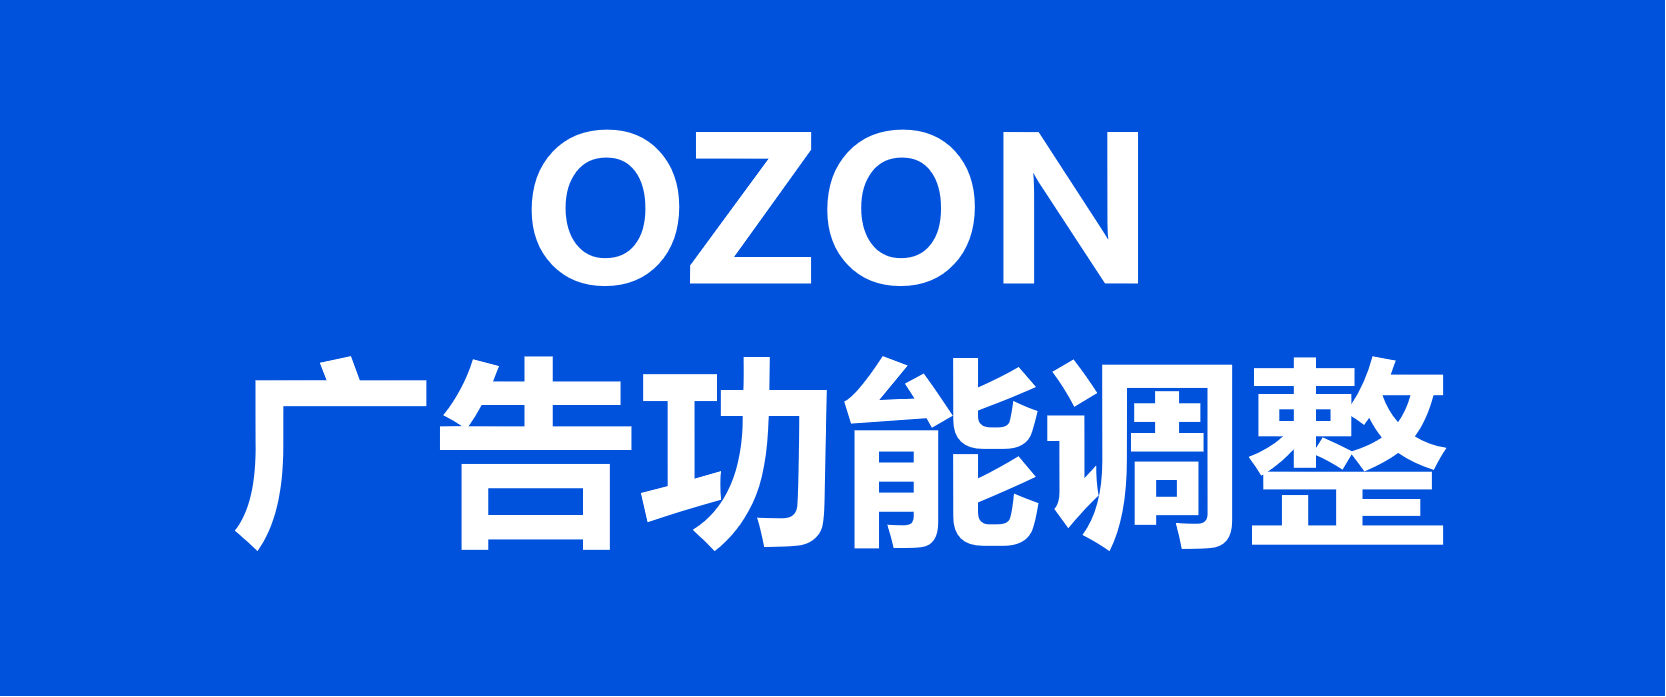 OZON模版及品牌货架广告功能调整